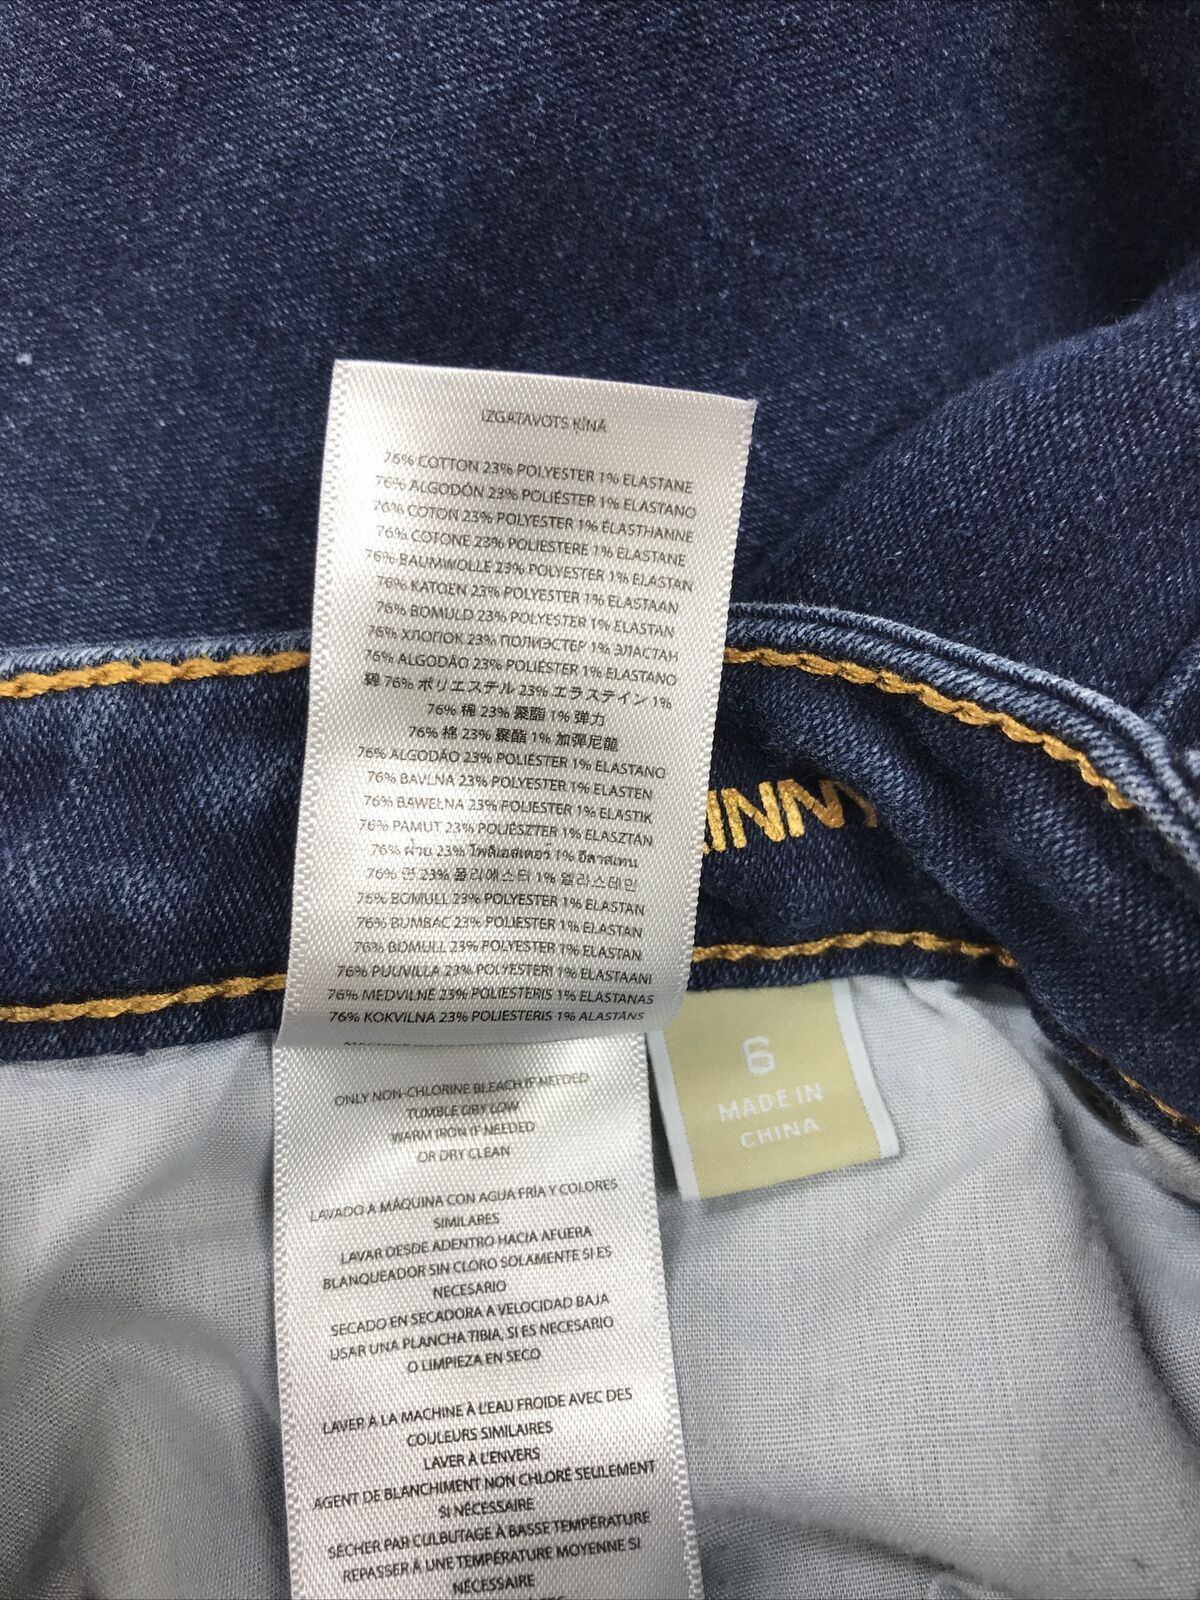 Michael Kors Women's Dark Wash Cropped Skinny Denim Jeans - 6